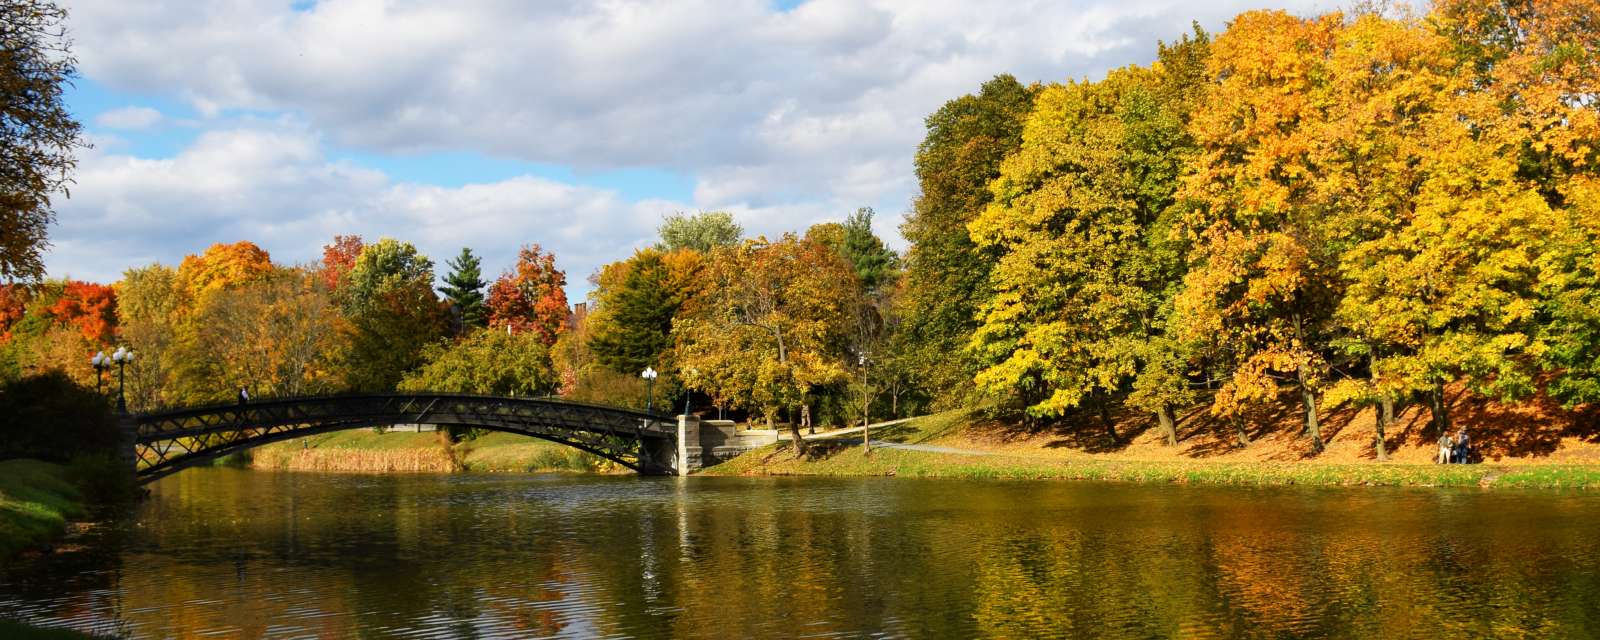 Washington Park in Fall